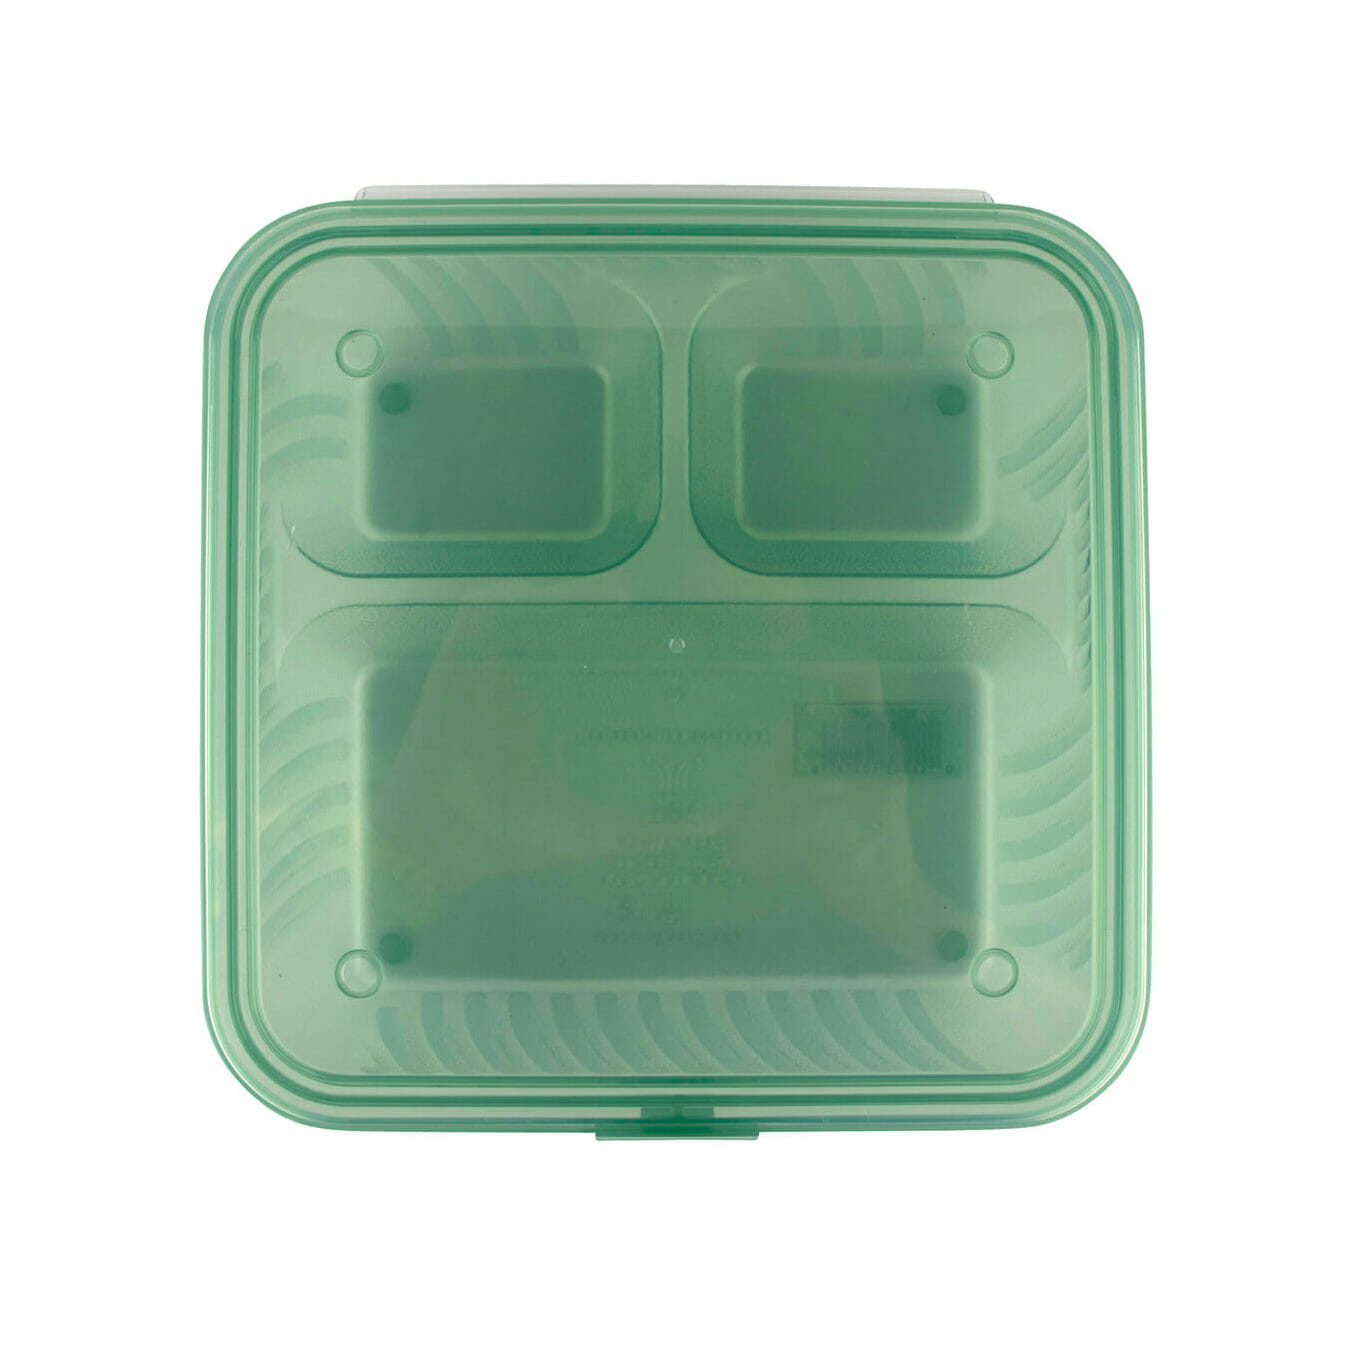 GET EC-11-1 Reusable 1 Compartment Leak Resistant Food Containers